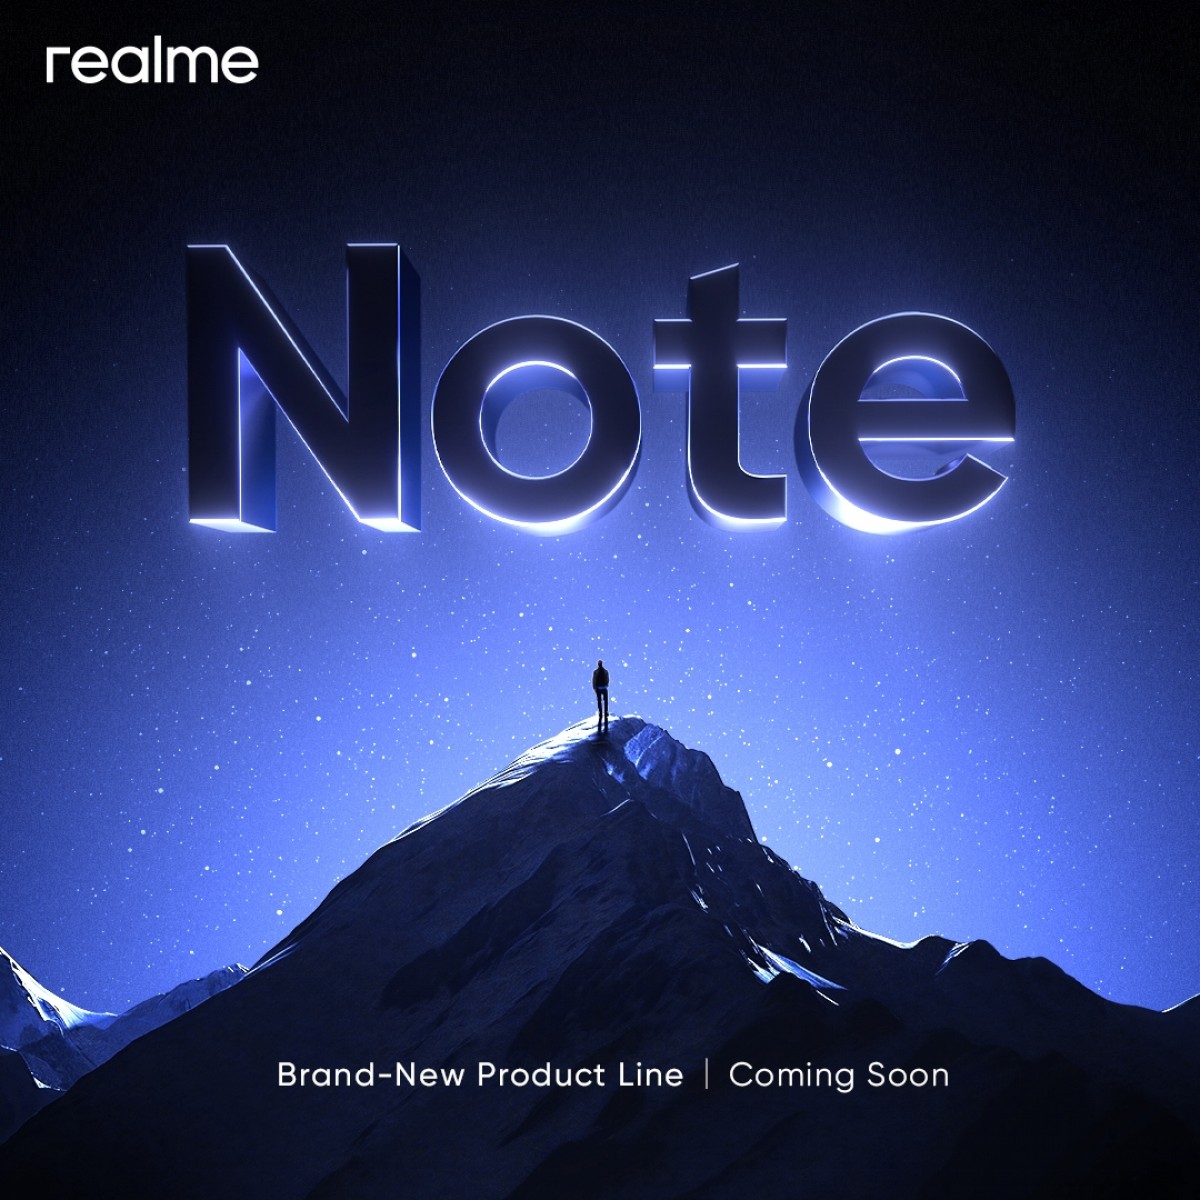 ستقدم Realme خط إنتاج Note قريبًا، وسيأتي Note 1 مزودًا بكاميرا بدقة 108 ميجابكسل